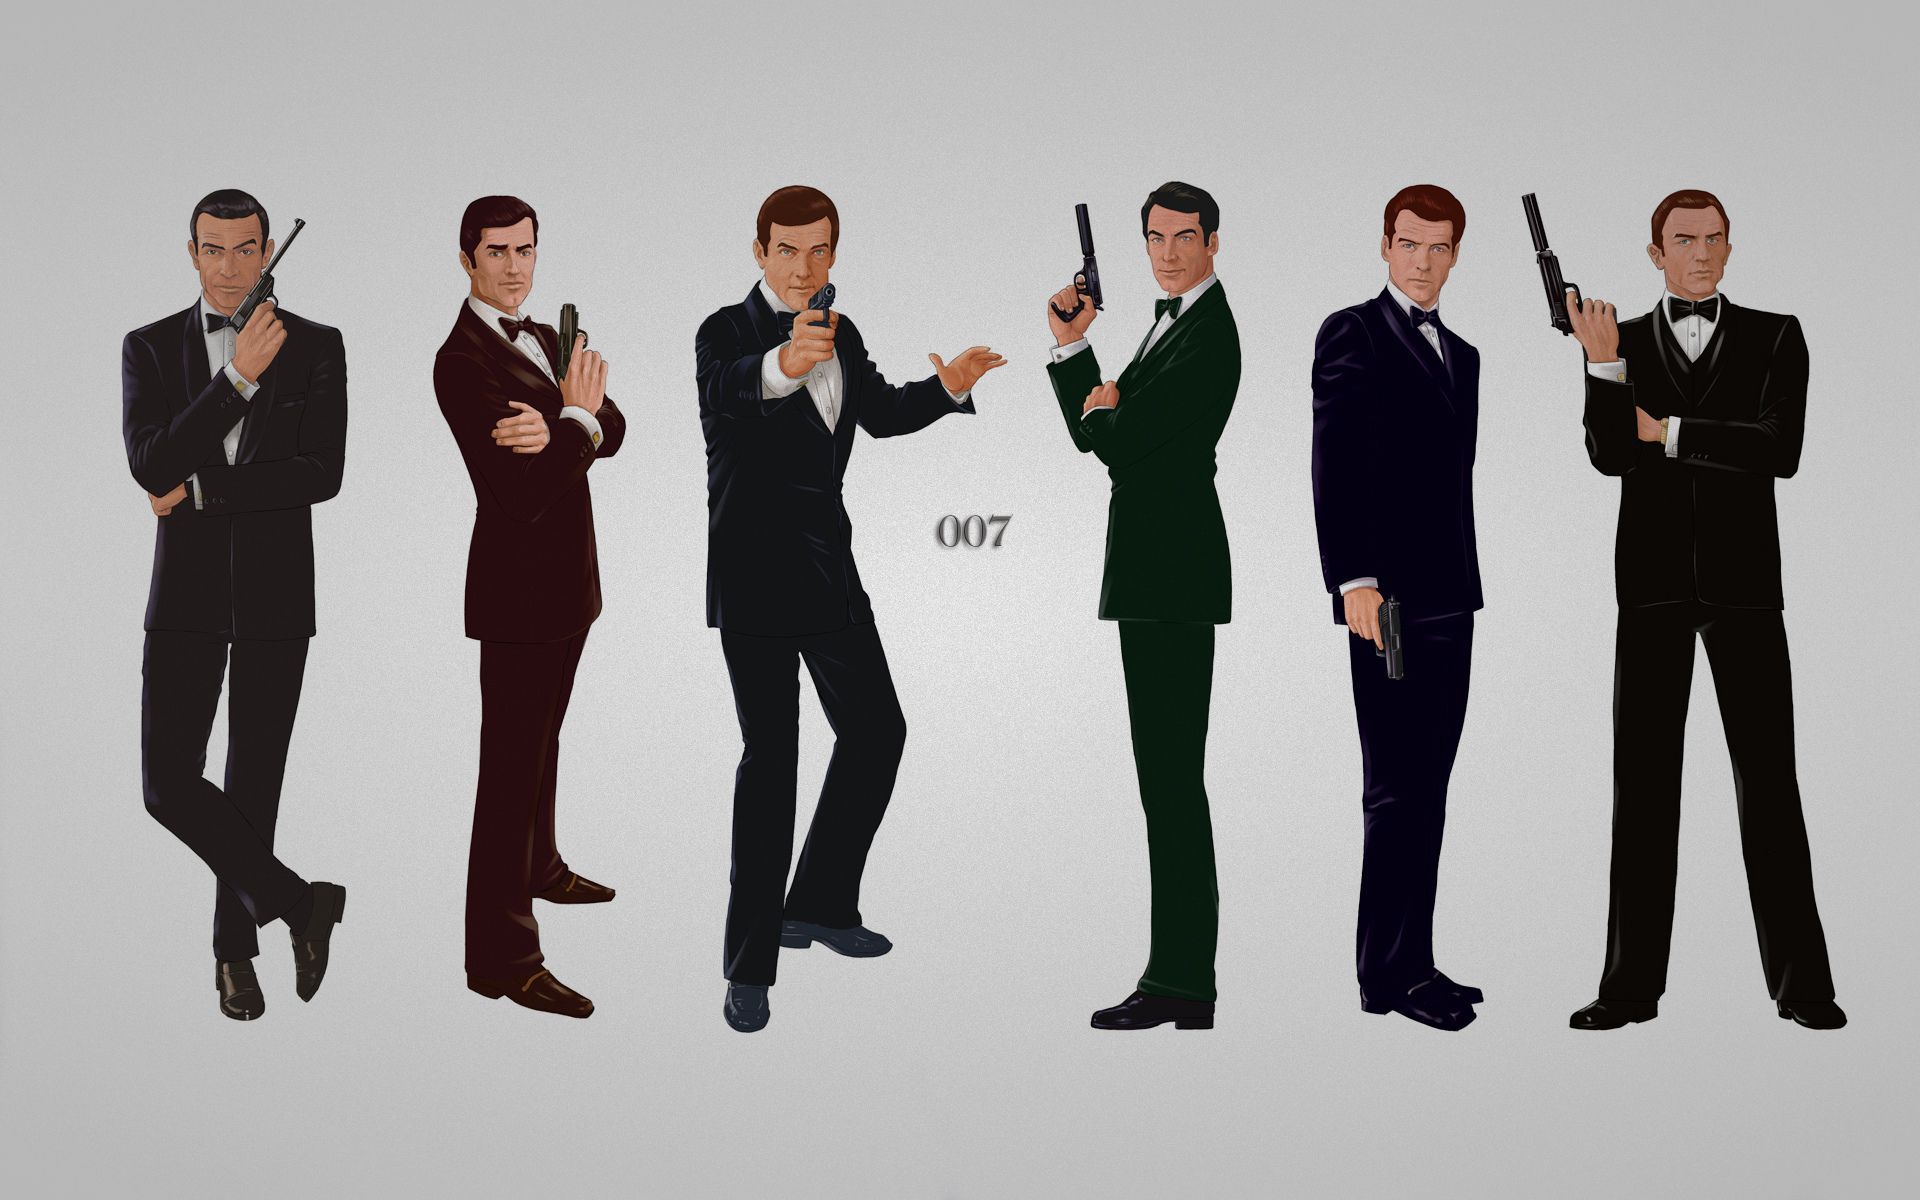 All James Bonds HD Wallpaper, Background Image. James bond, New james bond, James bond movies